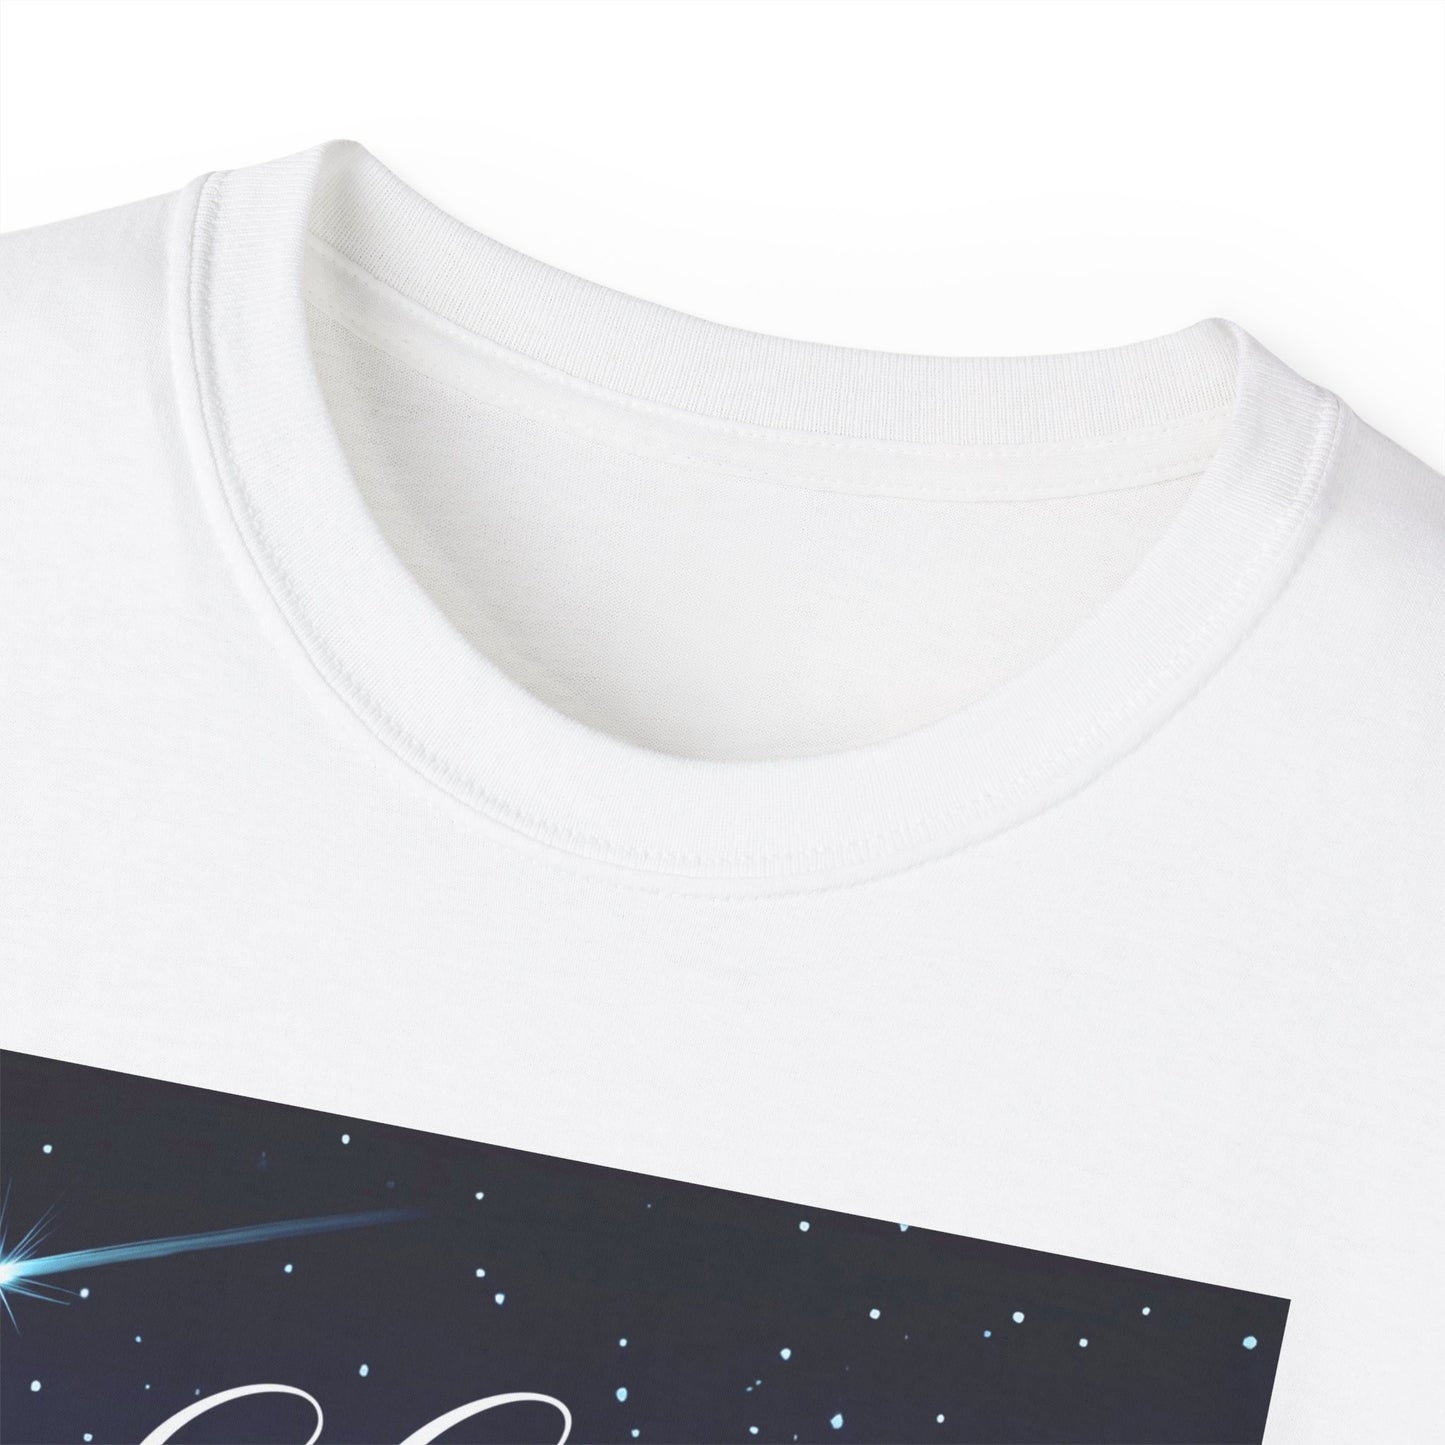 A Christmas Written In The Stars - Unisex T-Shirt